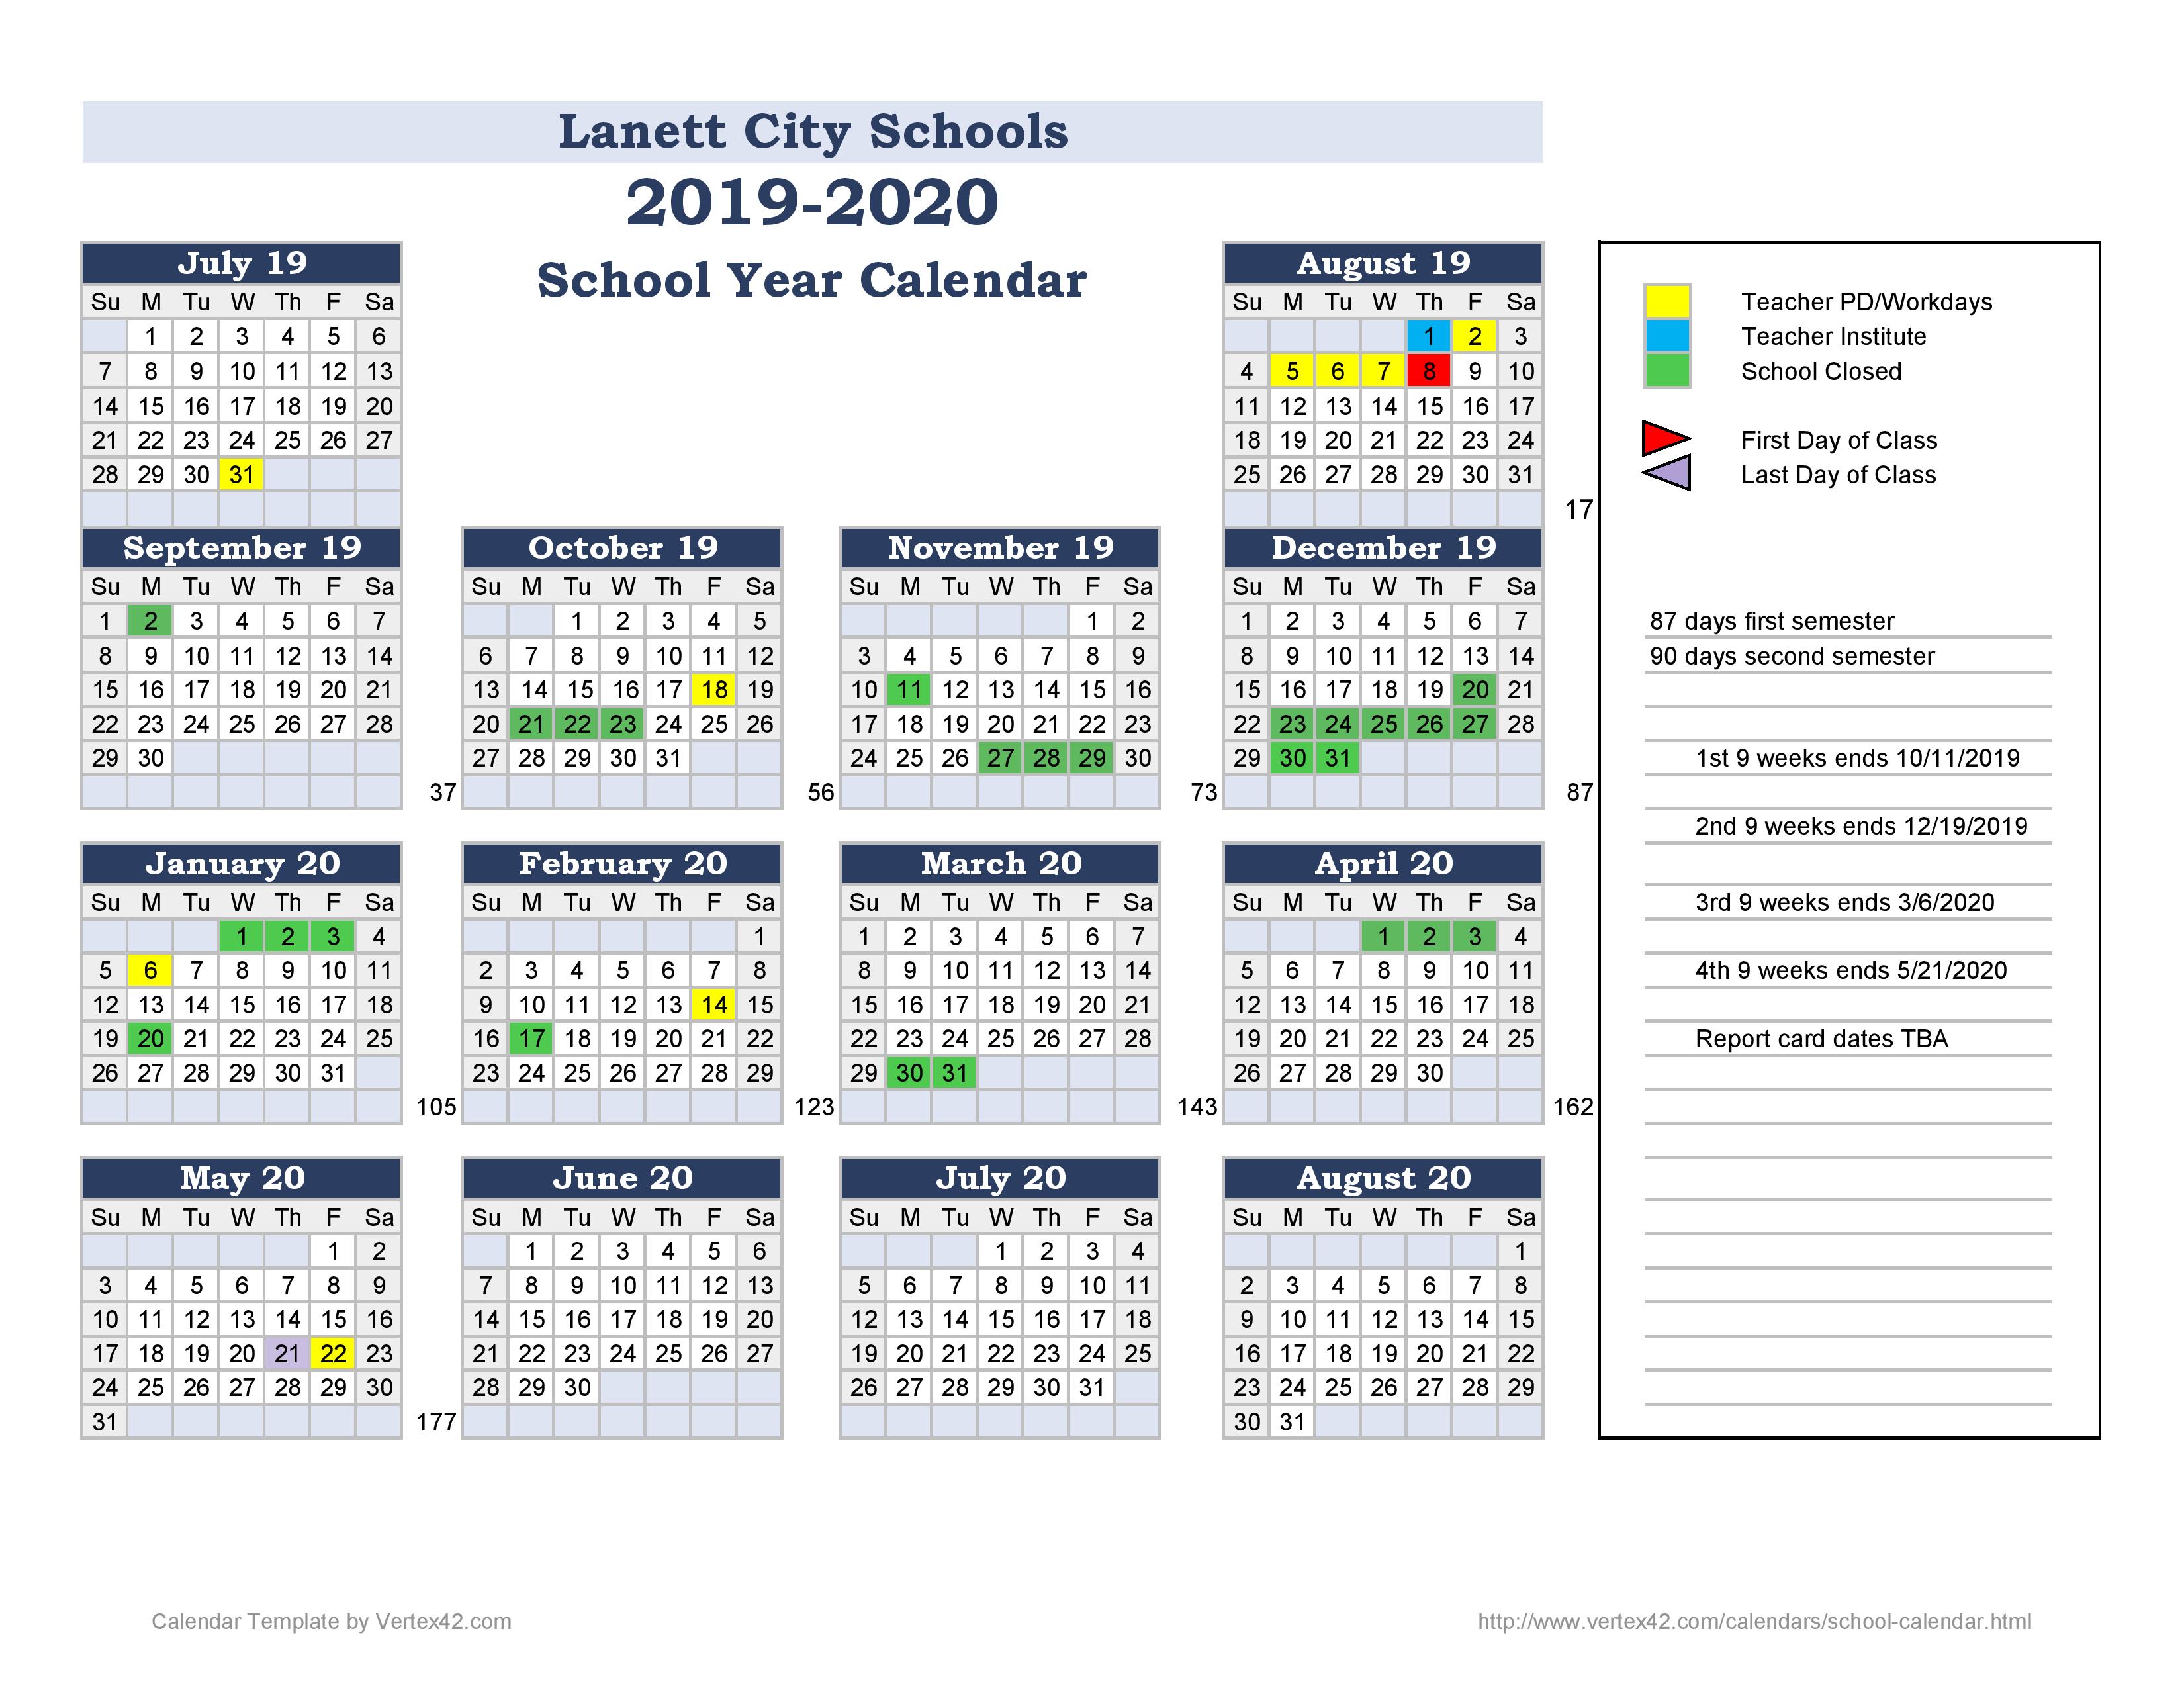 Lanett City School District